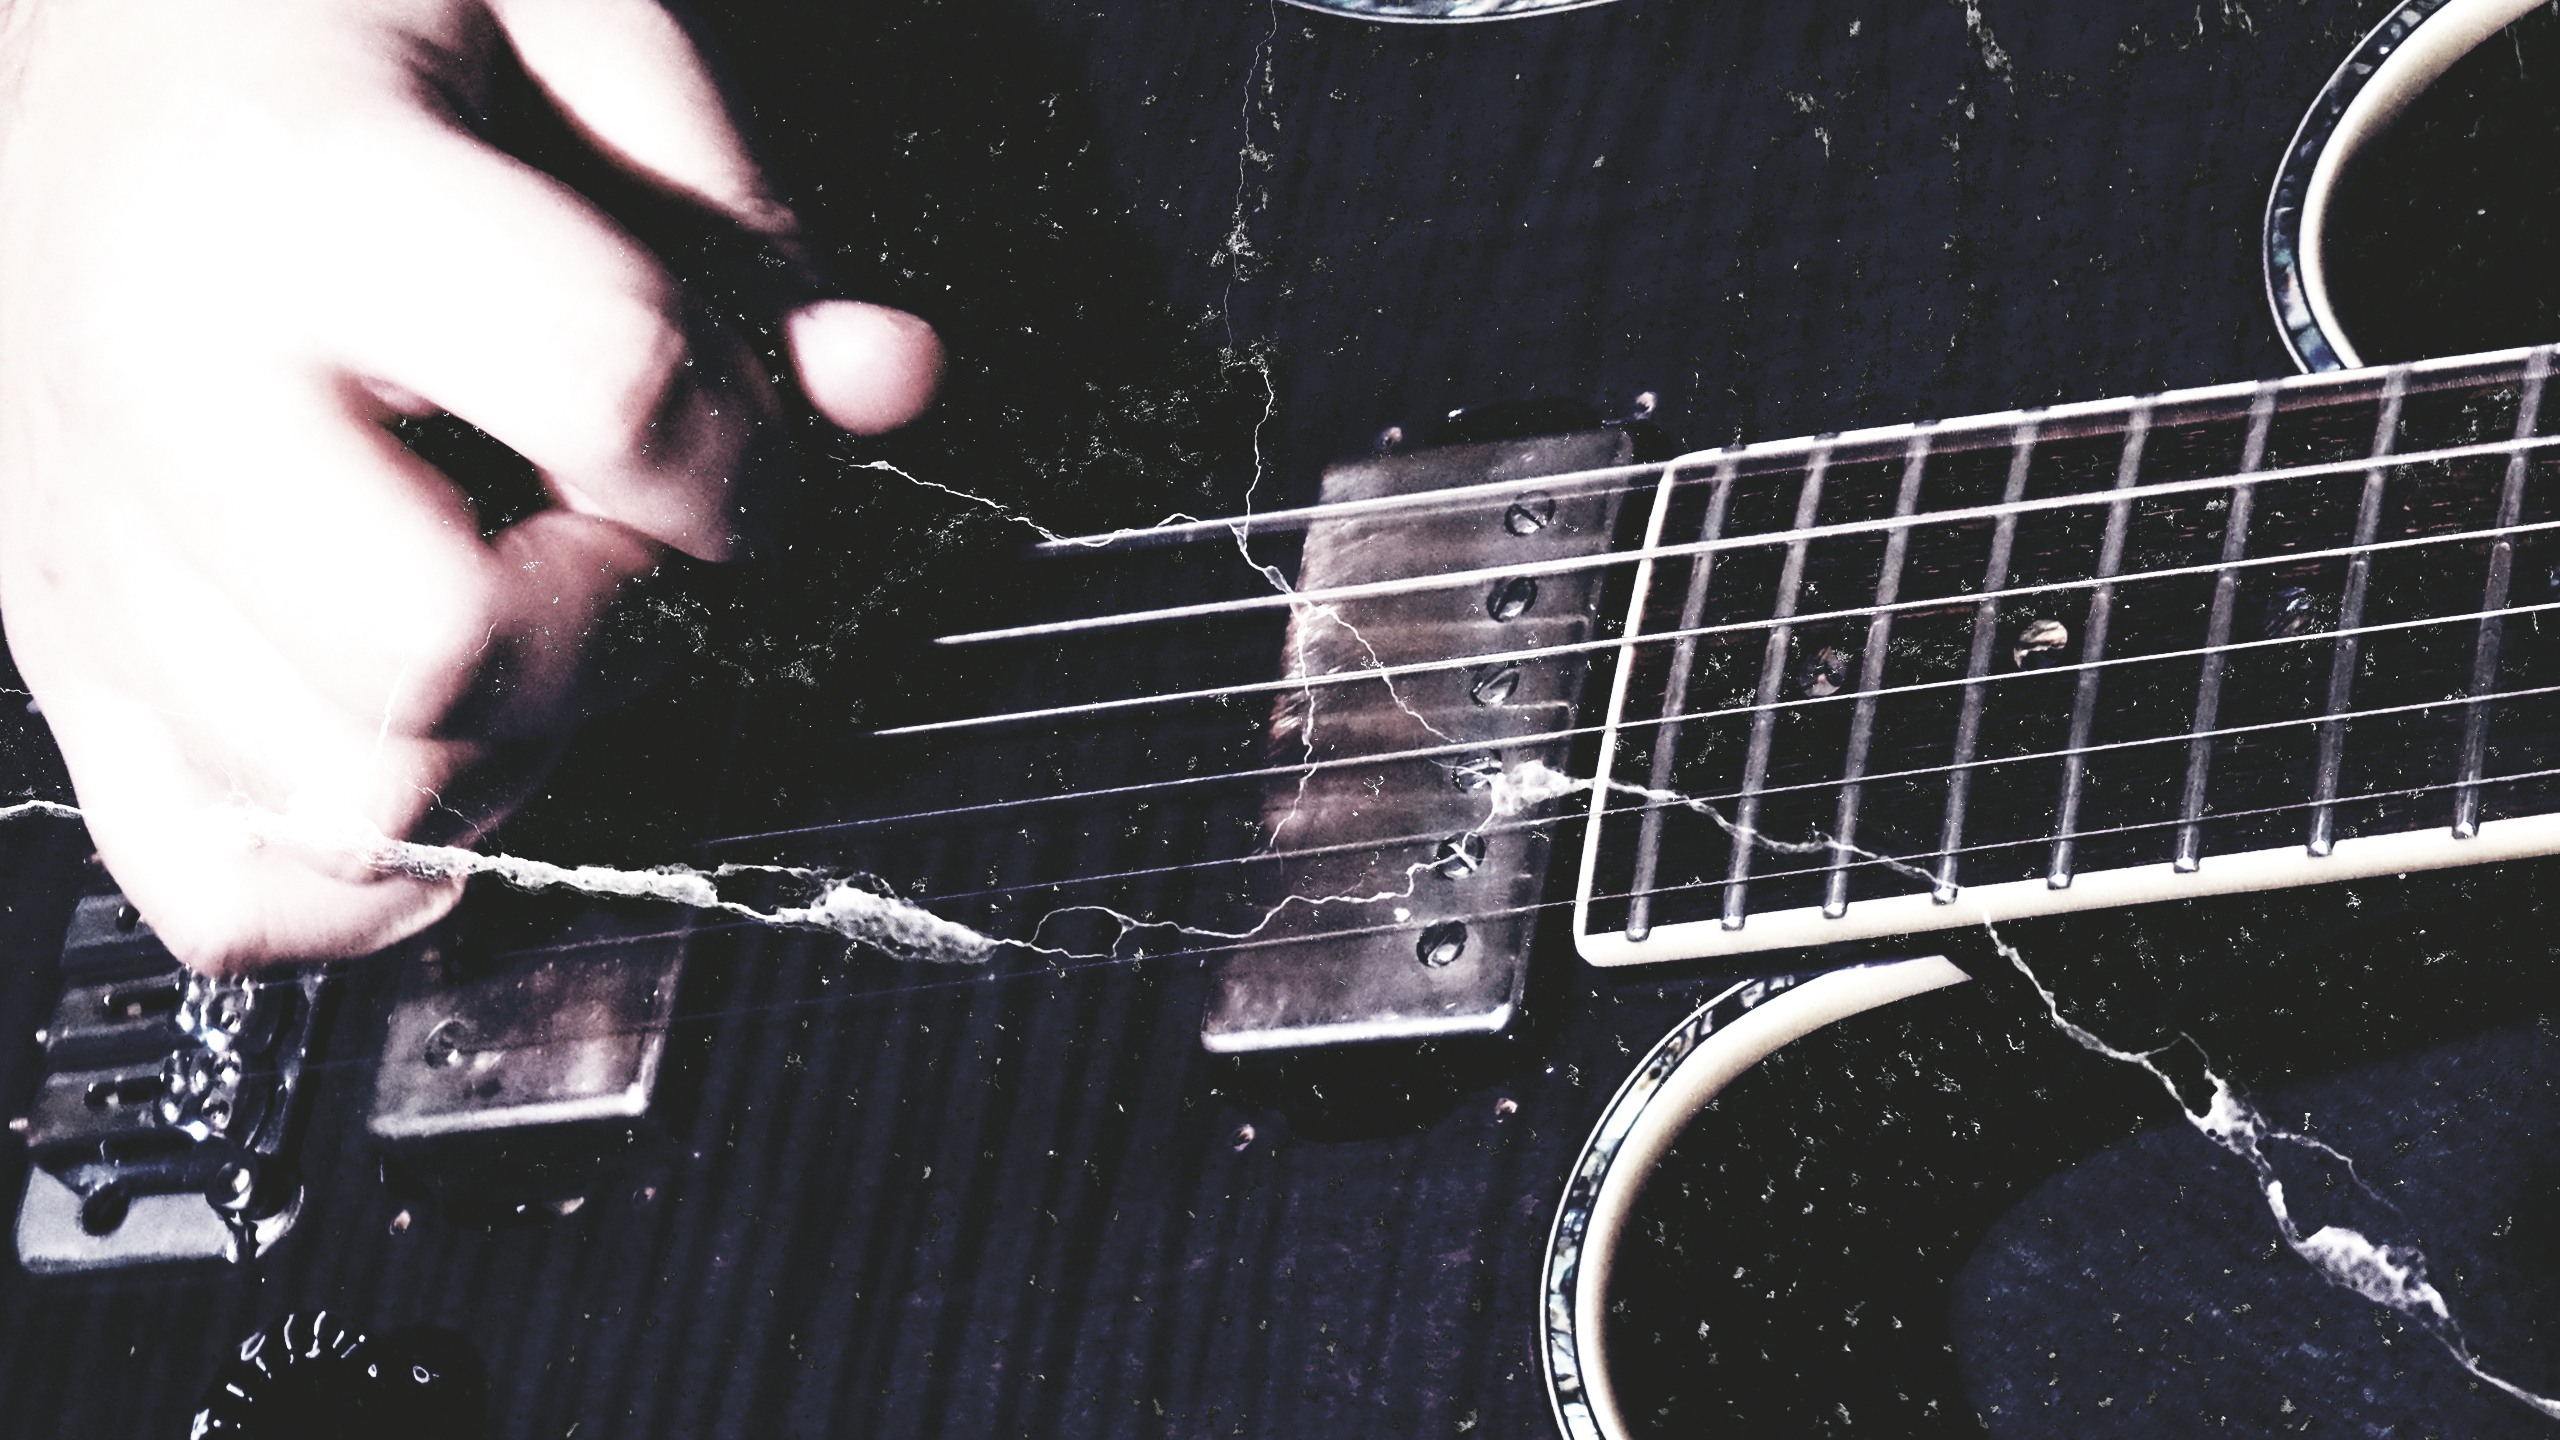 Music Guitar HD Wallpaper | Background Image